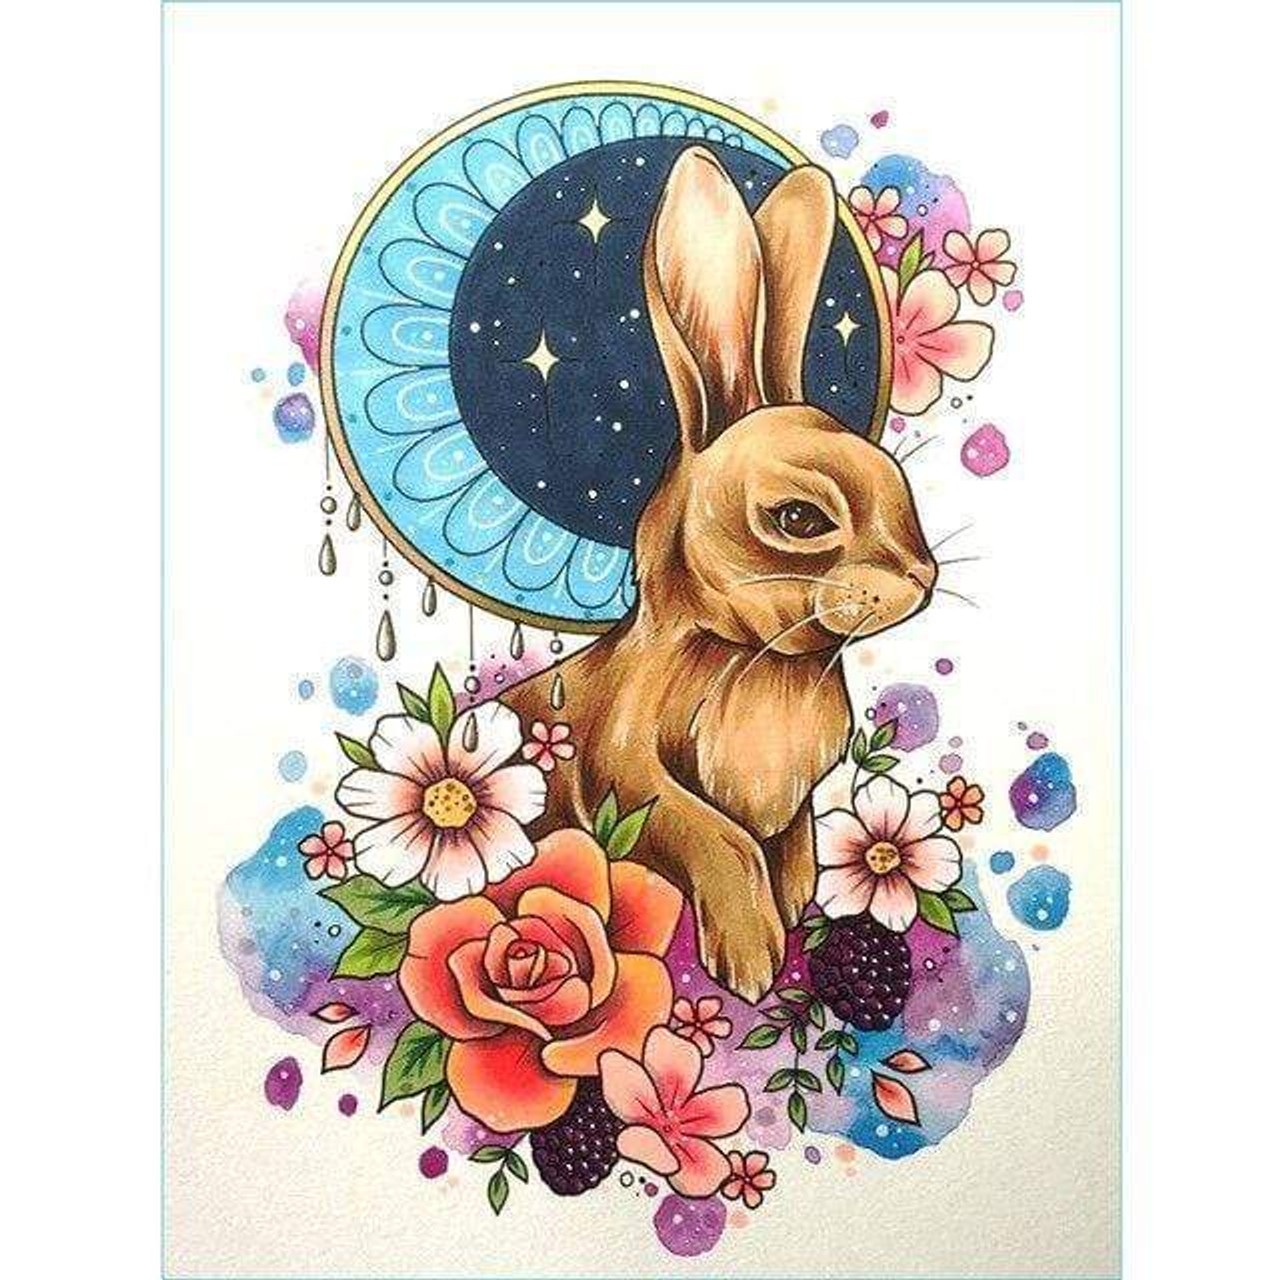 Diamond Painting White Rabbit with Pink Eyes Diy Diamond Painting  Embroidery Home Decor